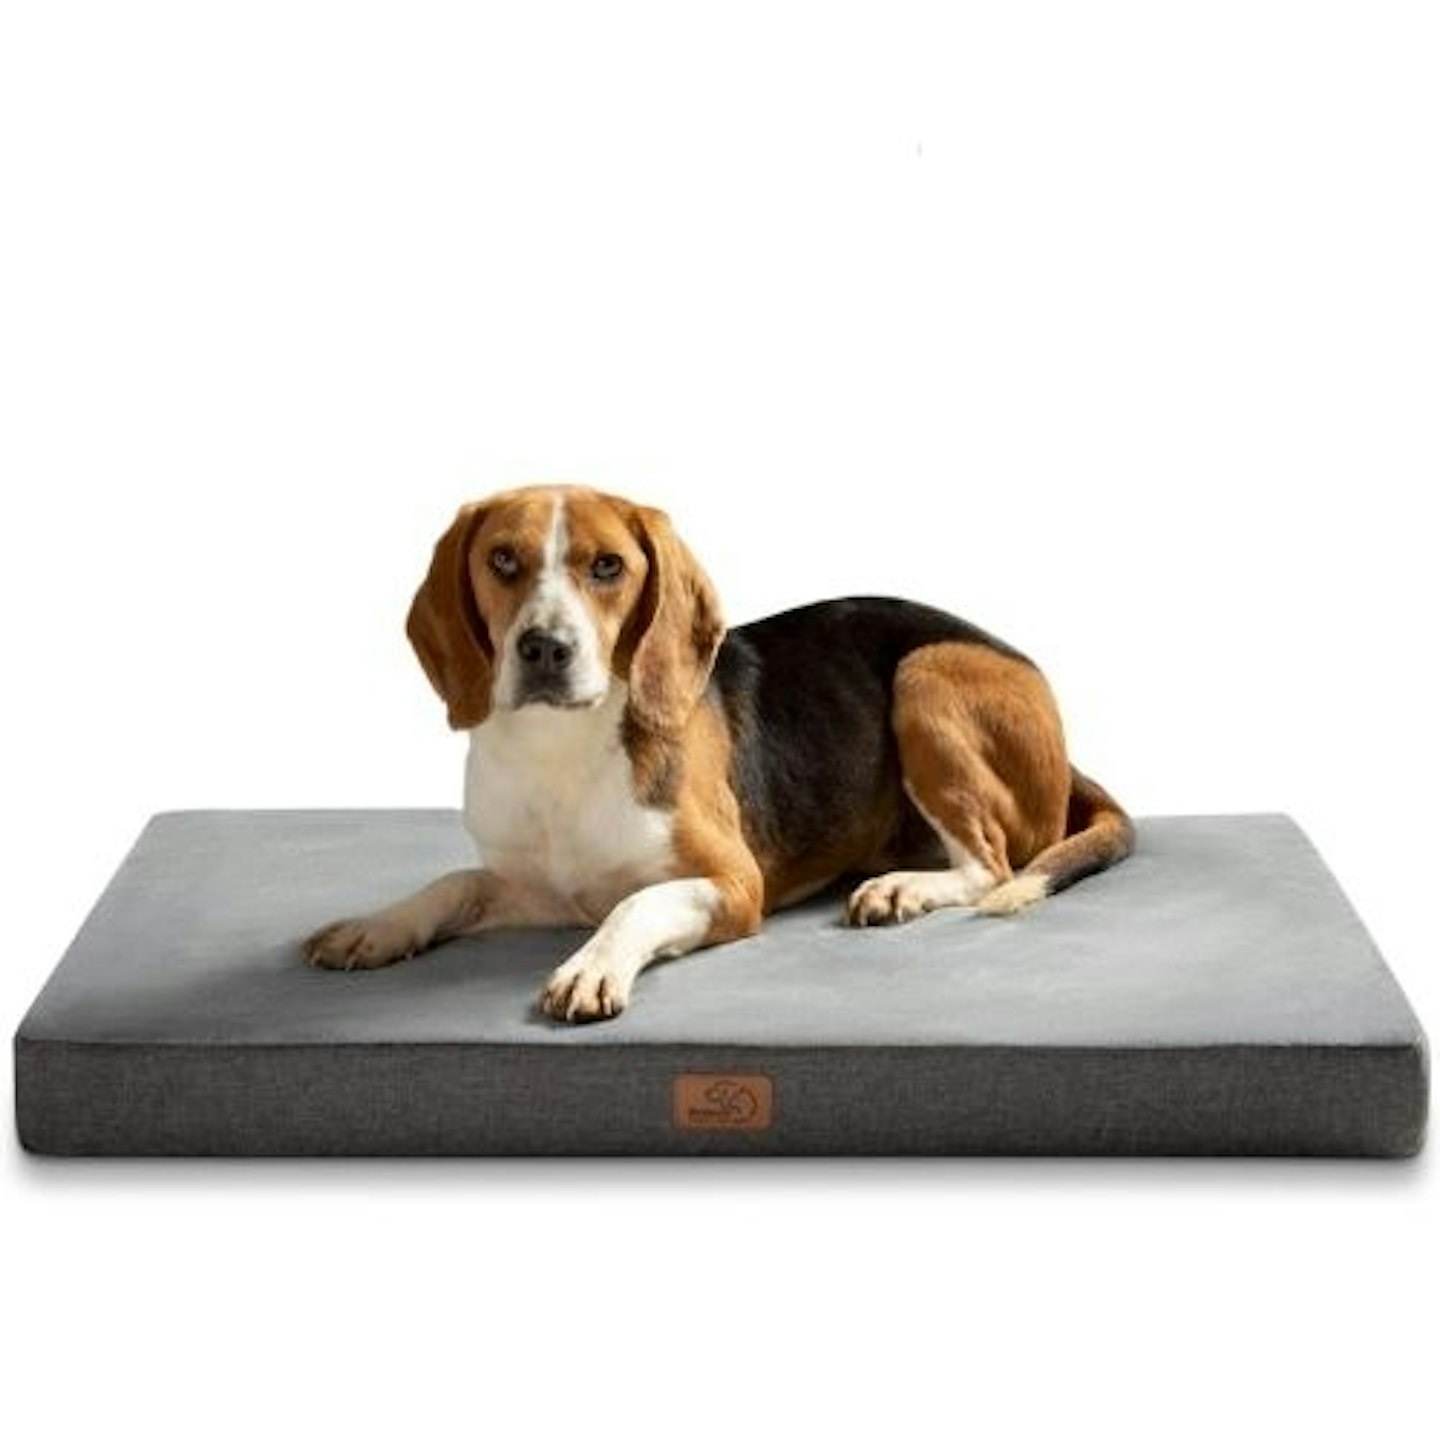 Bedsure Memory Foam Dog Bed